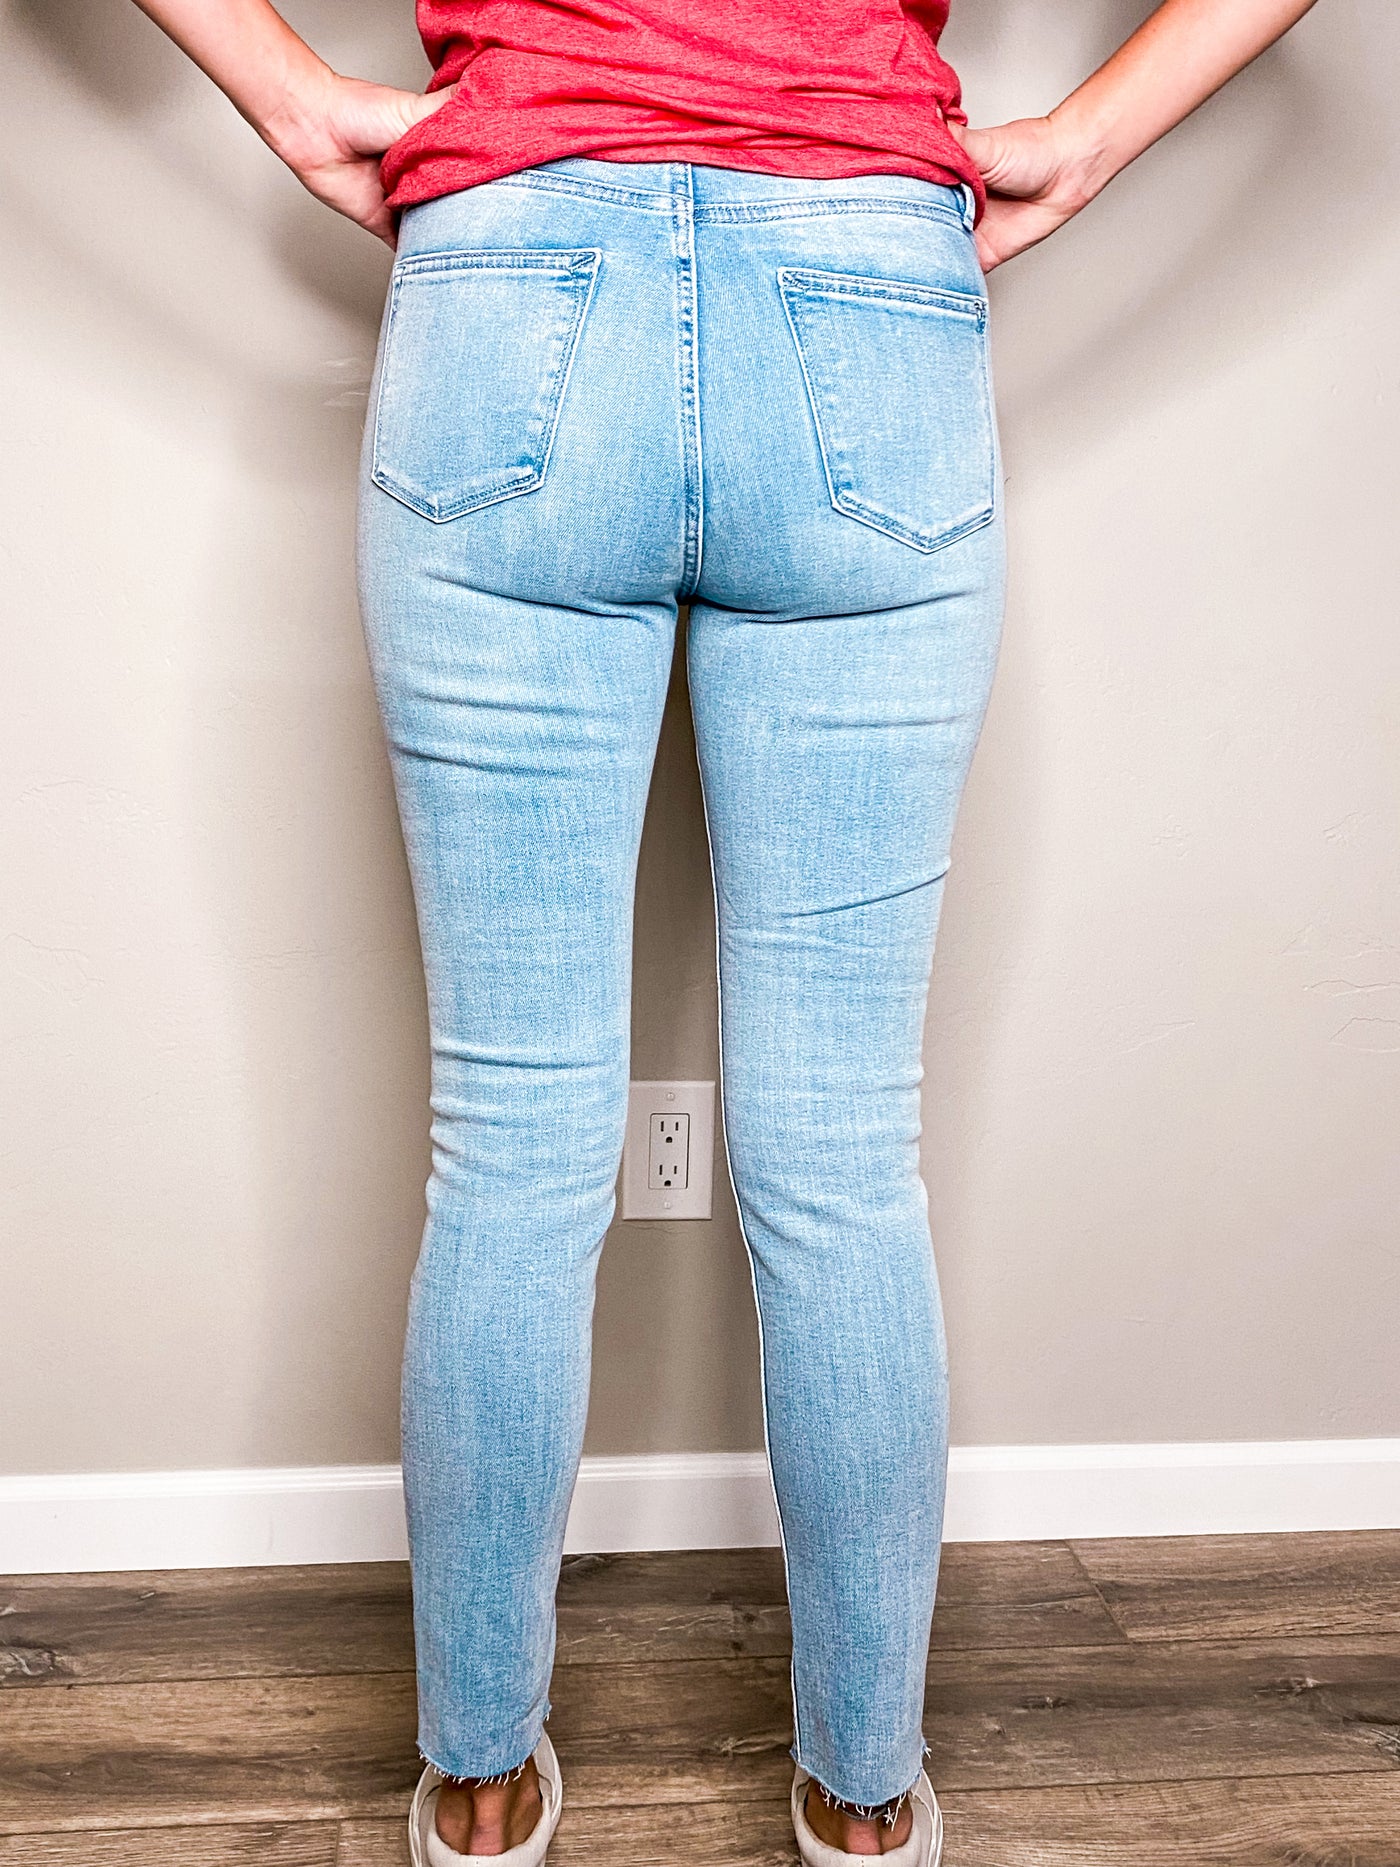 The Alexa Jeans